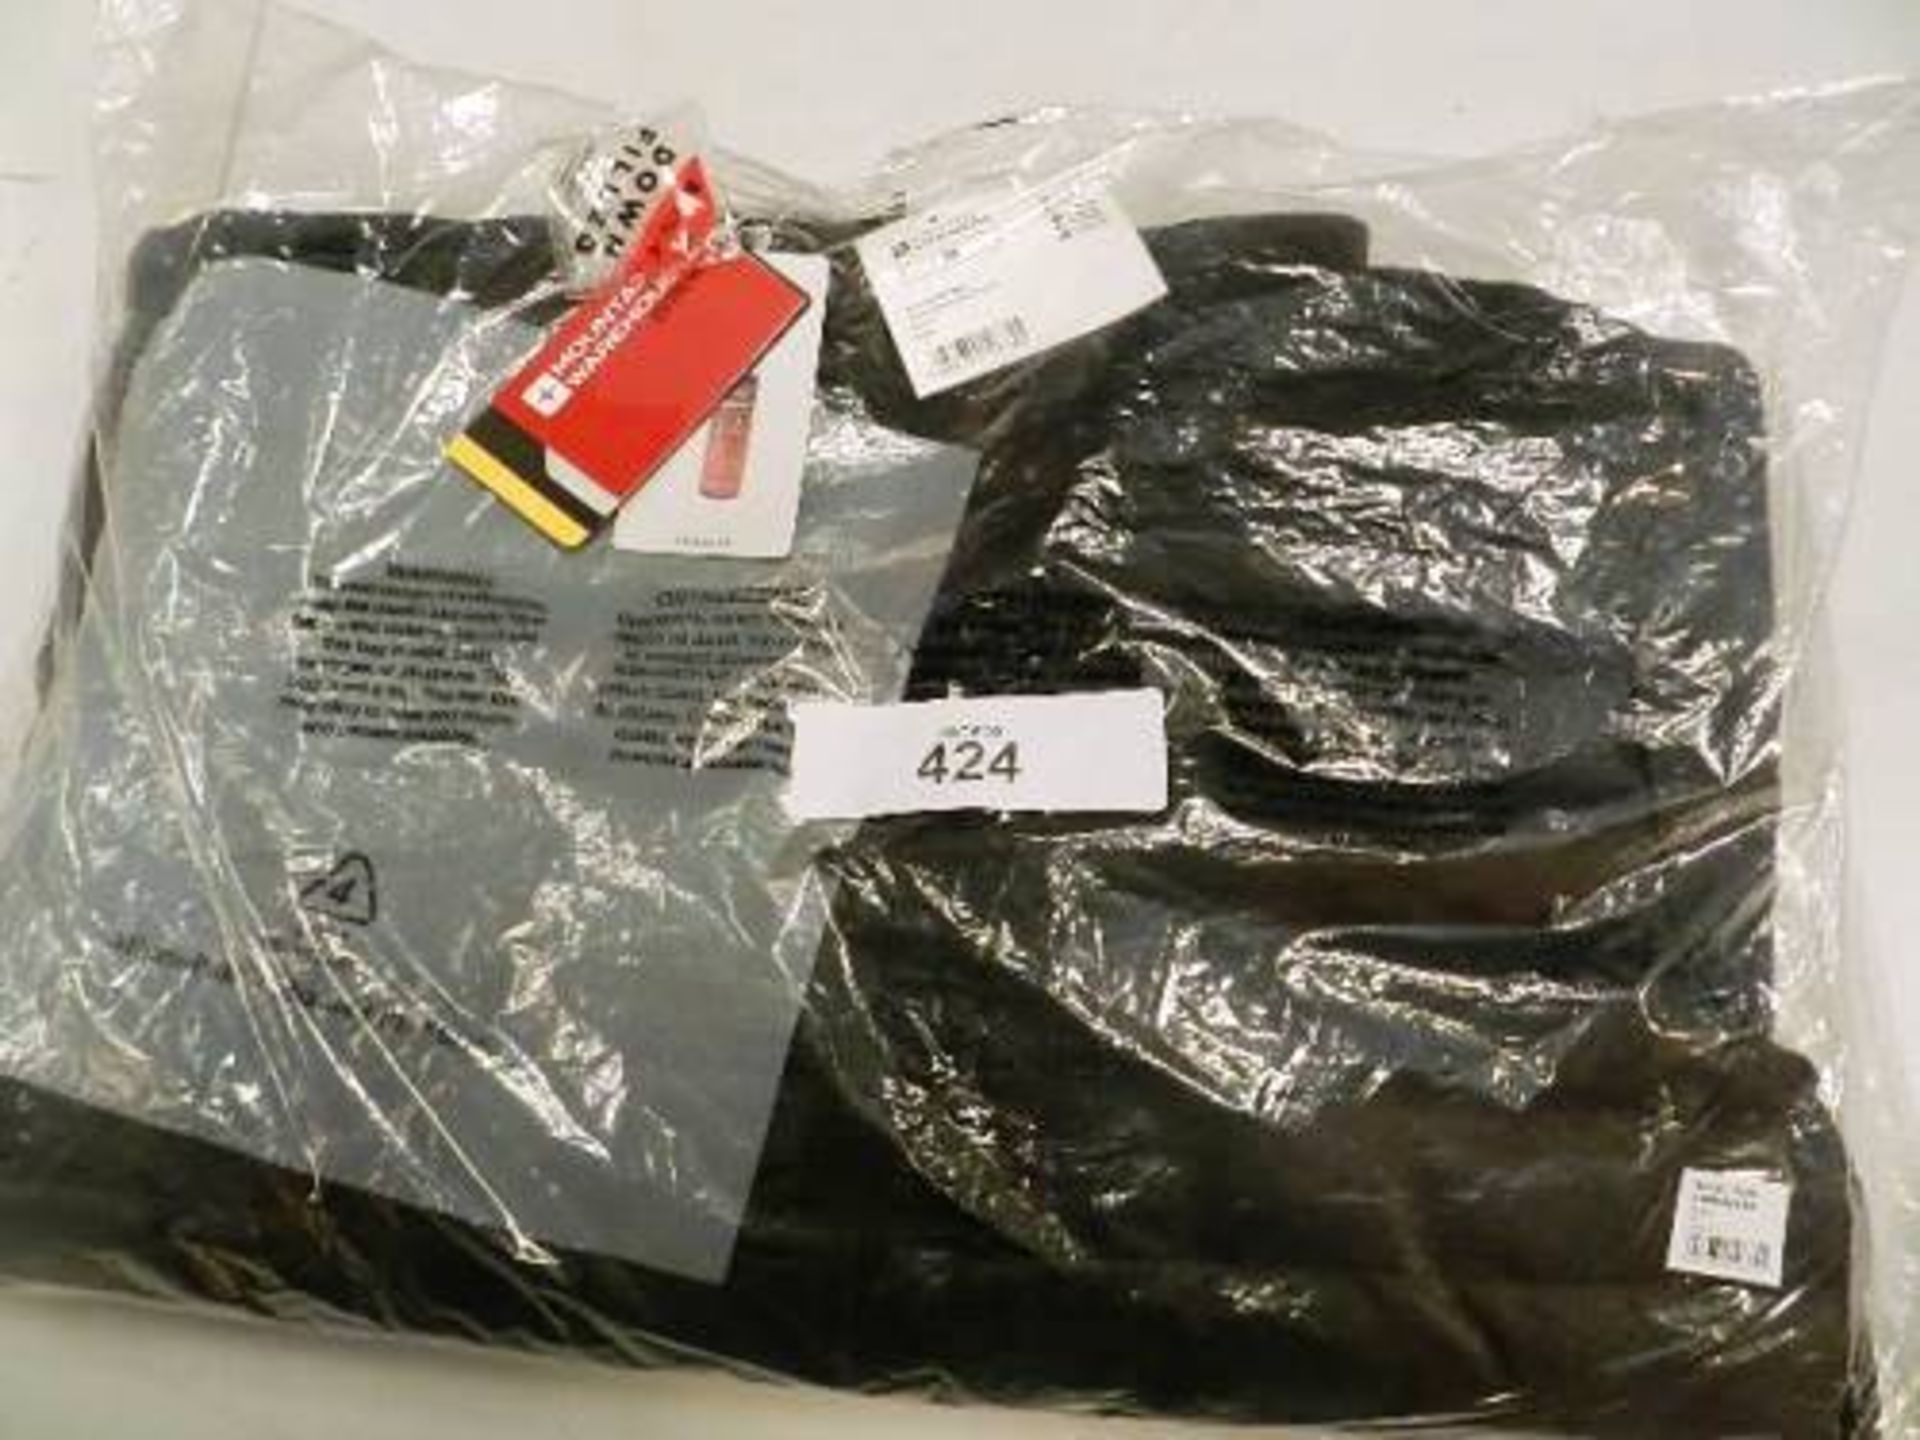 1 x Mountain Warehouse Henry II padded jacket, size medium, RRP £159.00 - New (ESB15A)